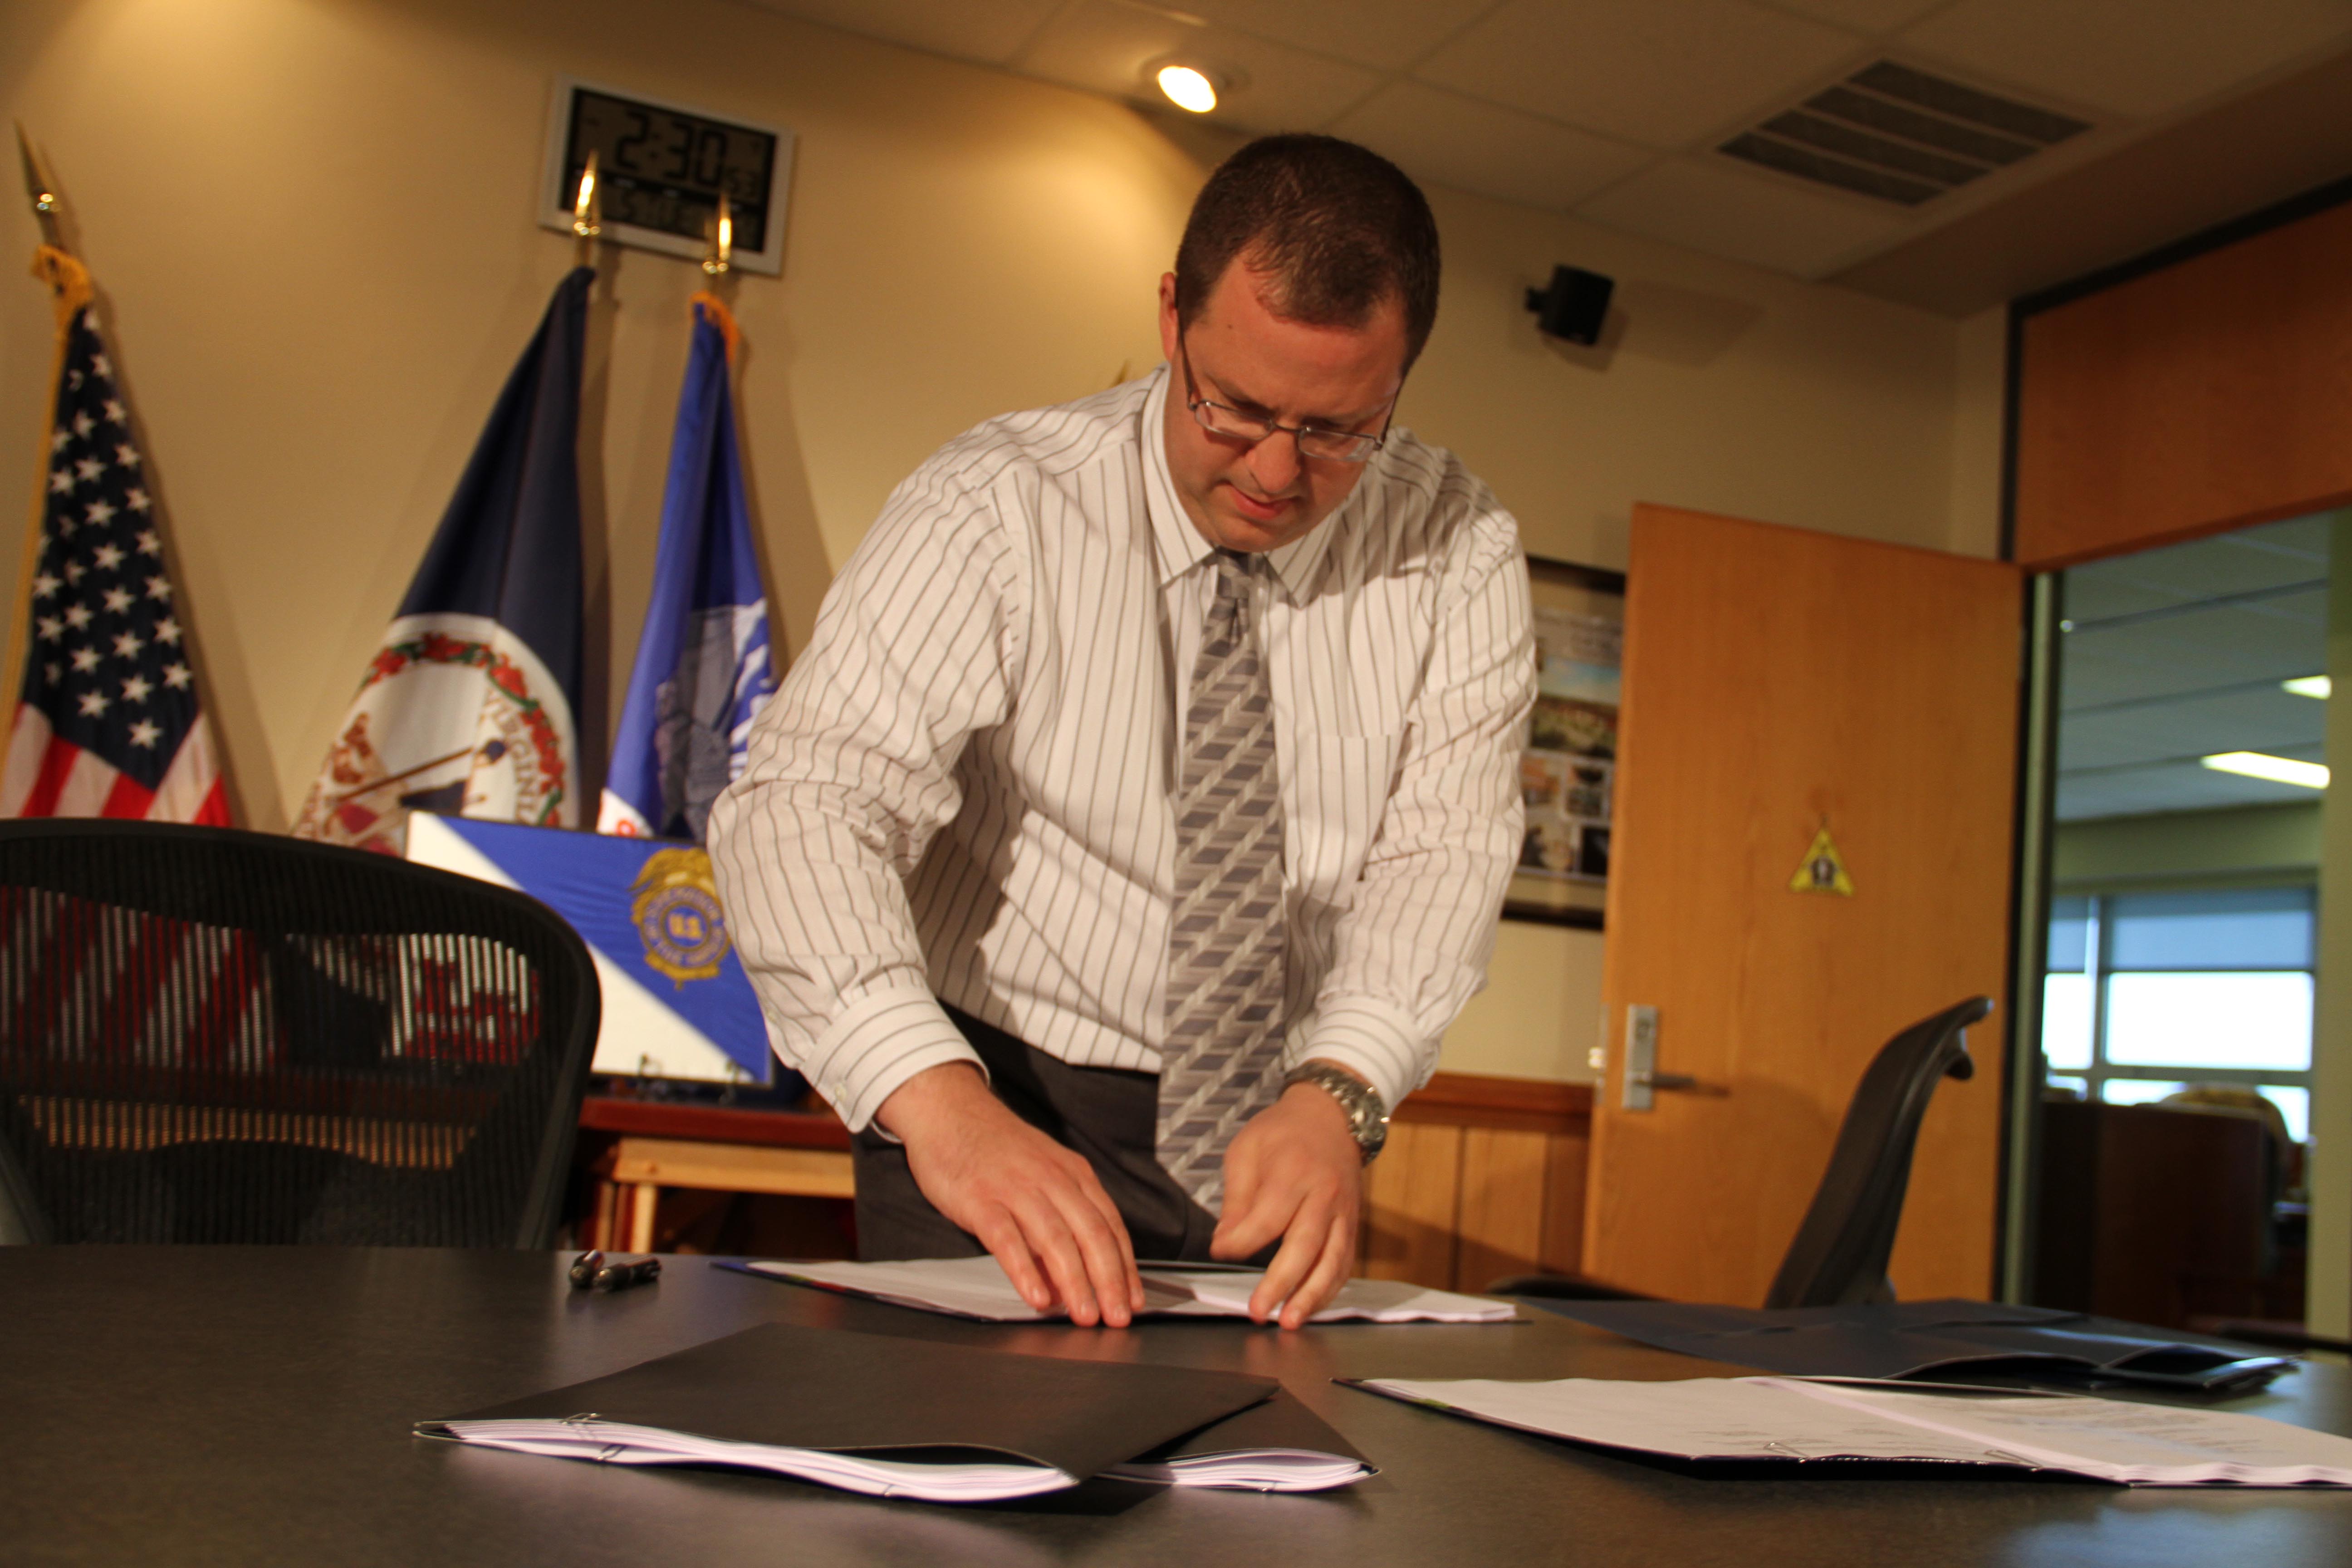 Image of Corps employee preparing documents